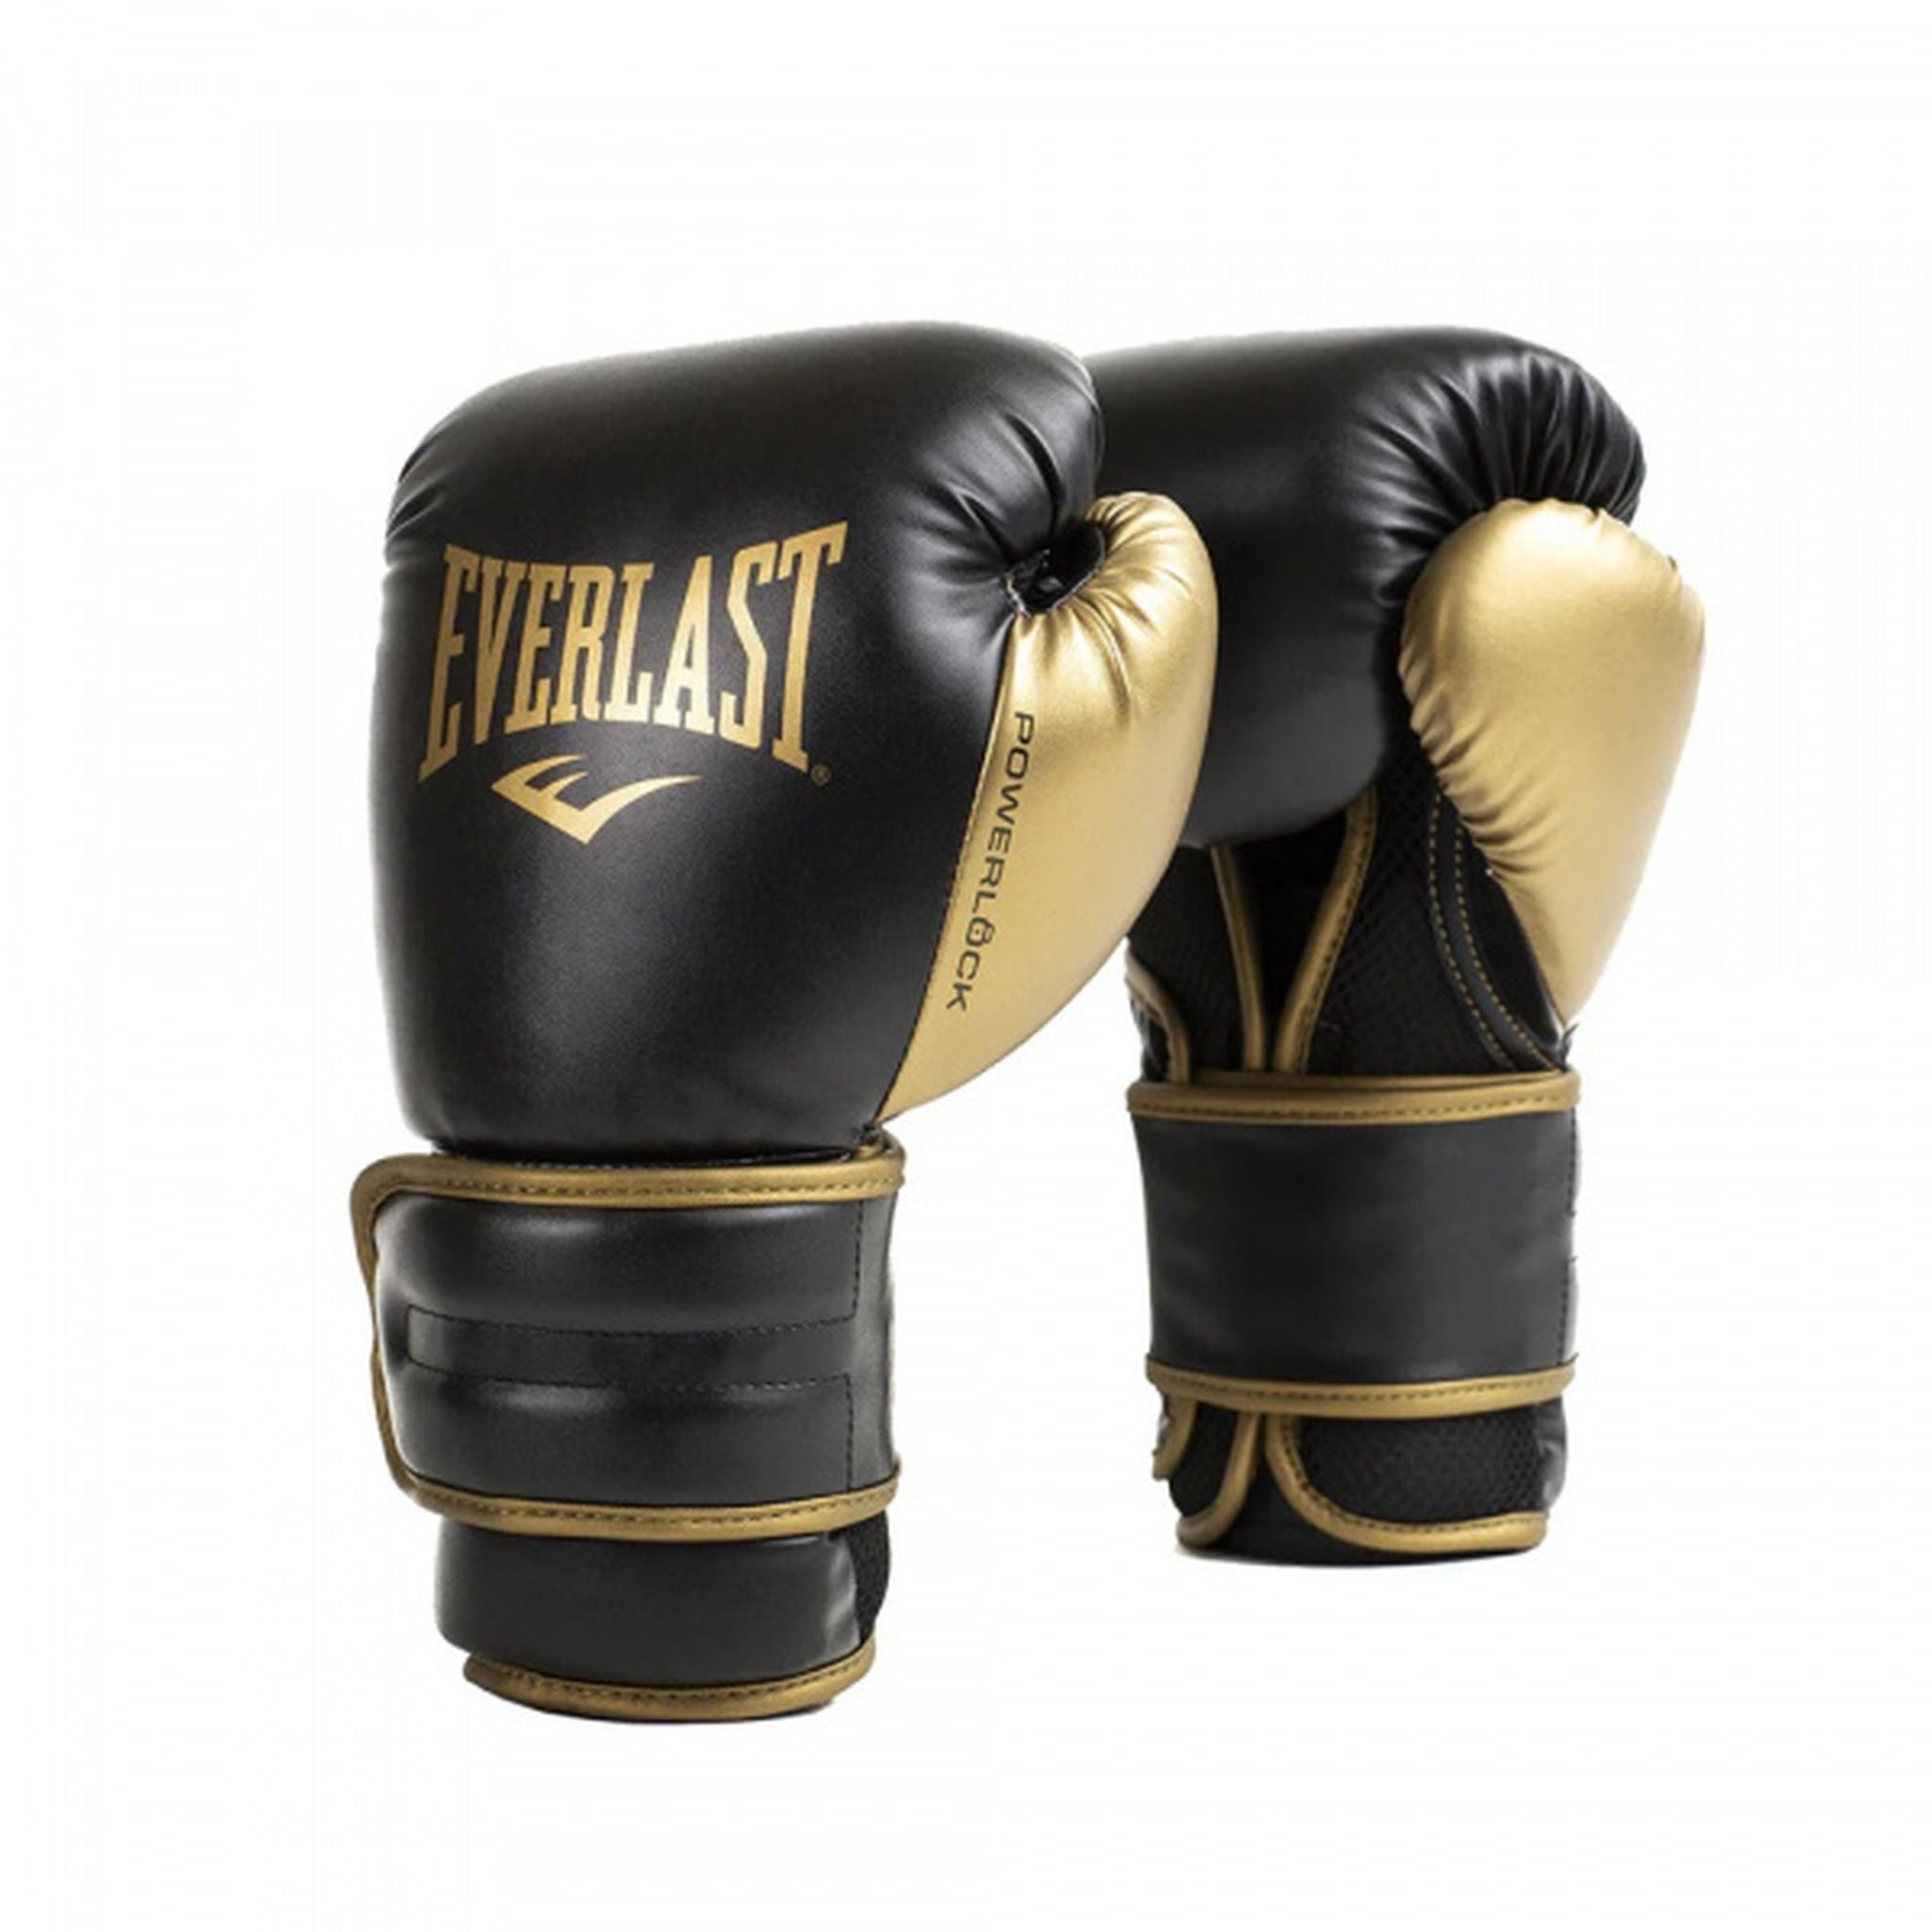 Everlast Powerlock 2 16OZ Boxing Training Glove